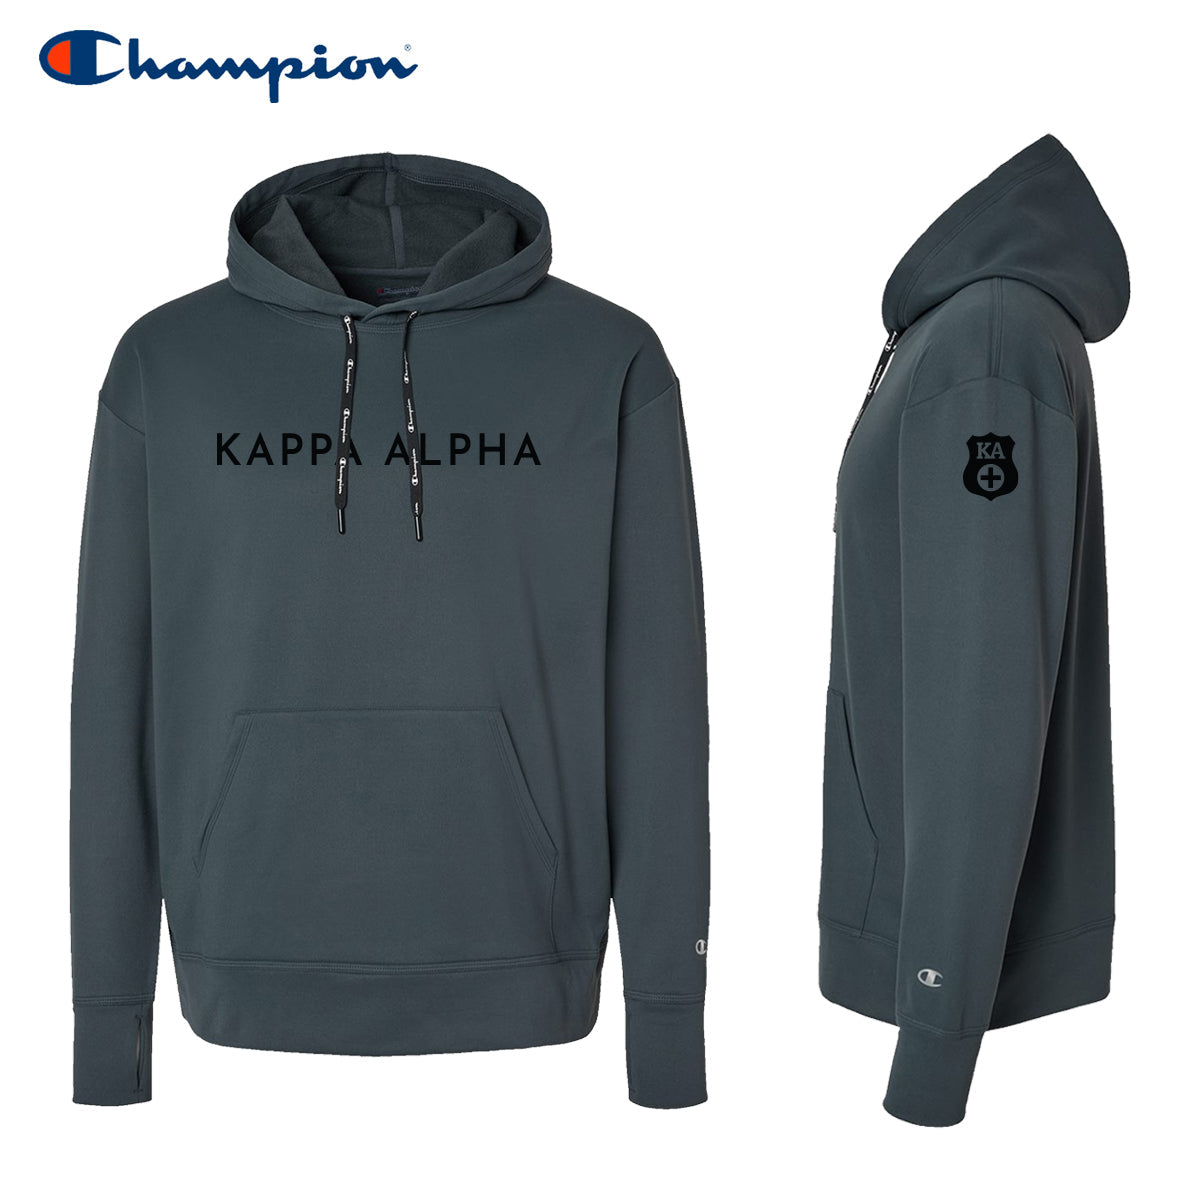 New! Kappa Alpha Champion Performance Hoodie